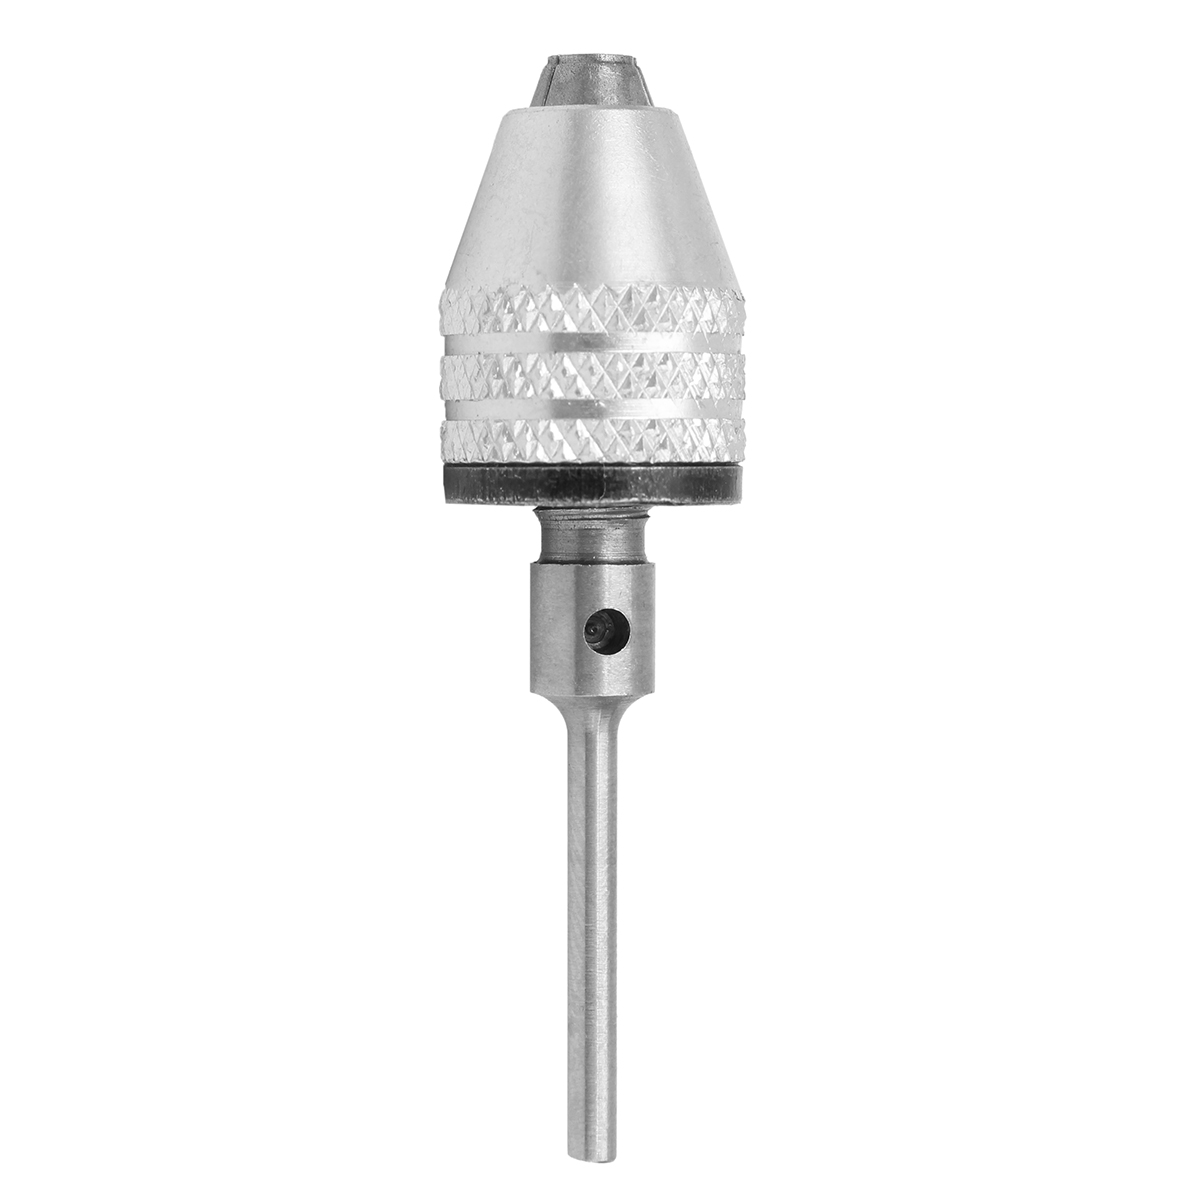 0-4mm Electric Grinder Keyless Drill Chucks Adapter Converter 2.3 mm Shank Shaft For Dremel Power Tool Accessories